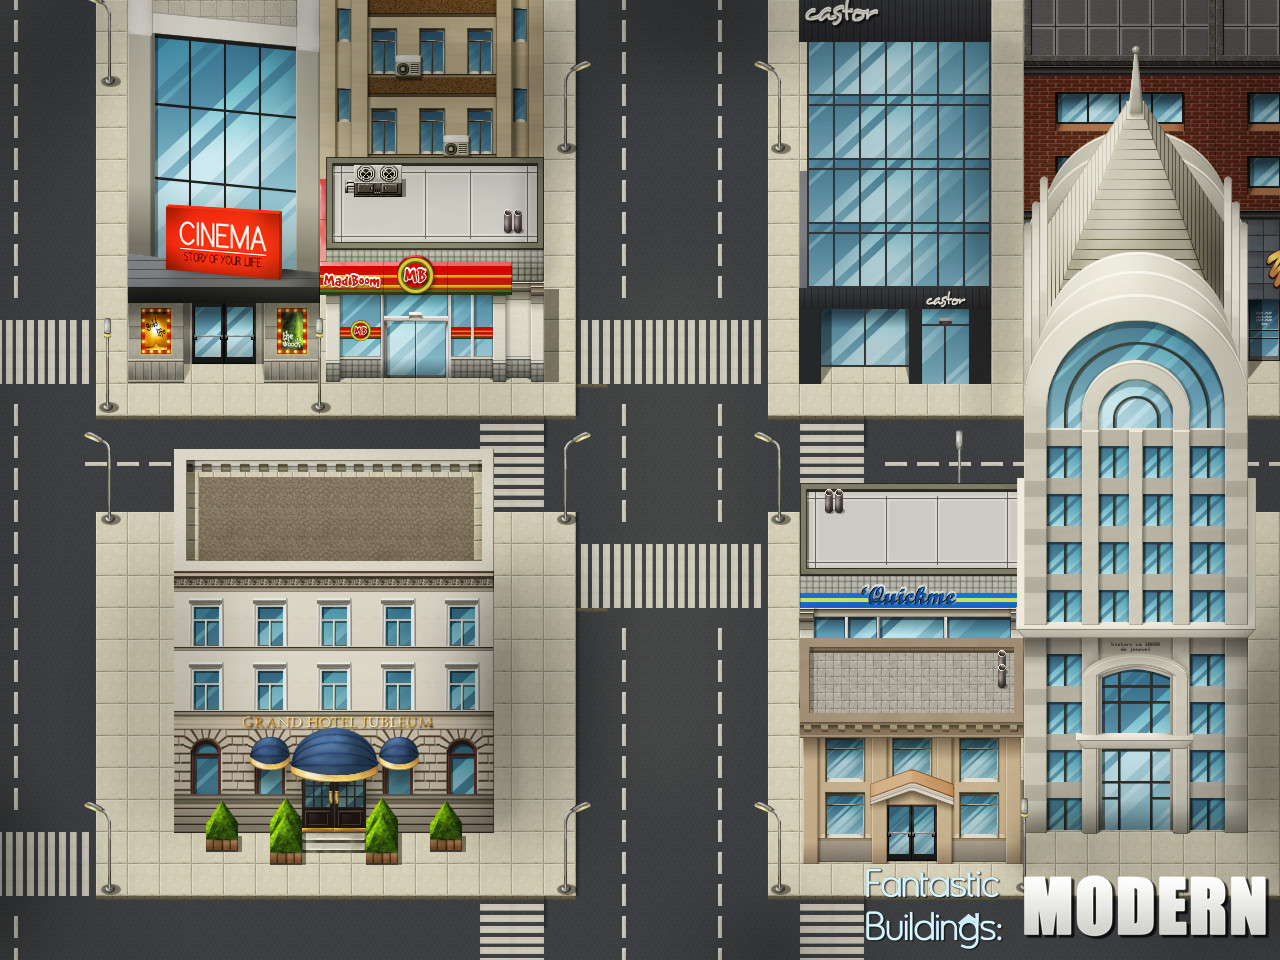 RPG Maker VX - Ace Fantastic Buildings: Modern DLC EU Steam CD Key 5.07 $